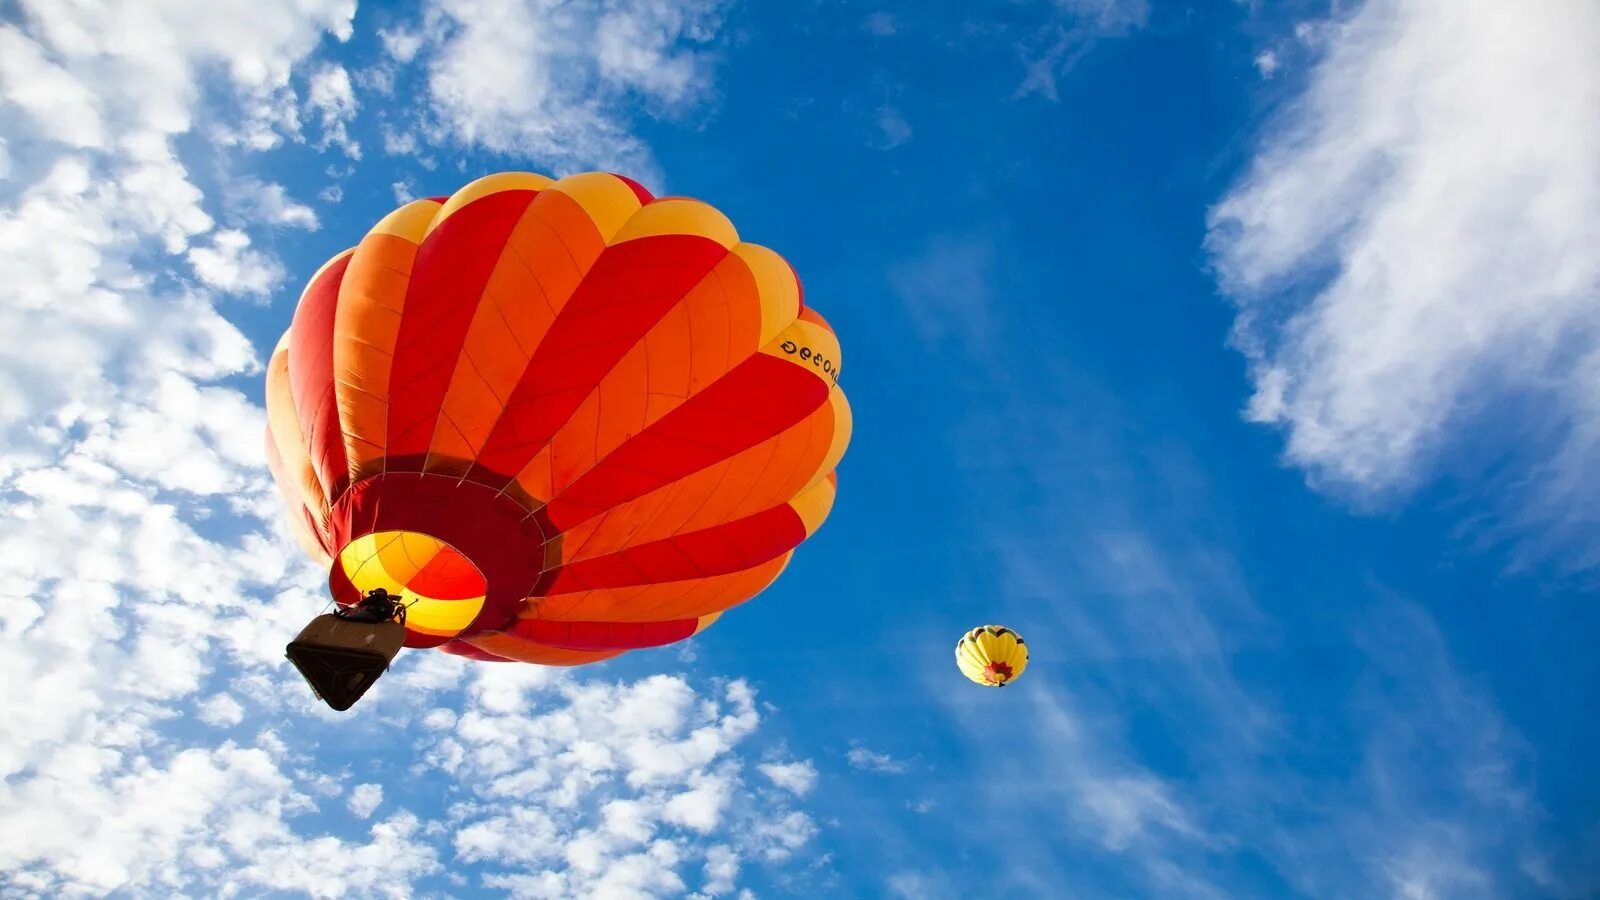 На оранжевом шаре. Воздушный шар мандаринового цвета. Большой воздушный шар. Летающий воздушный шар. Воздушный шар аэростат.